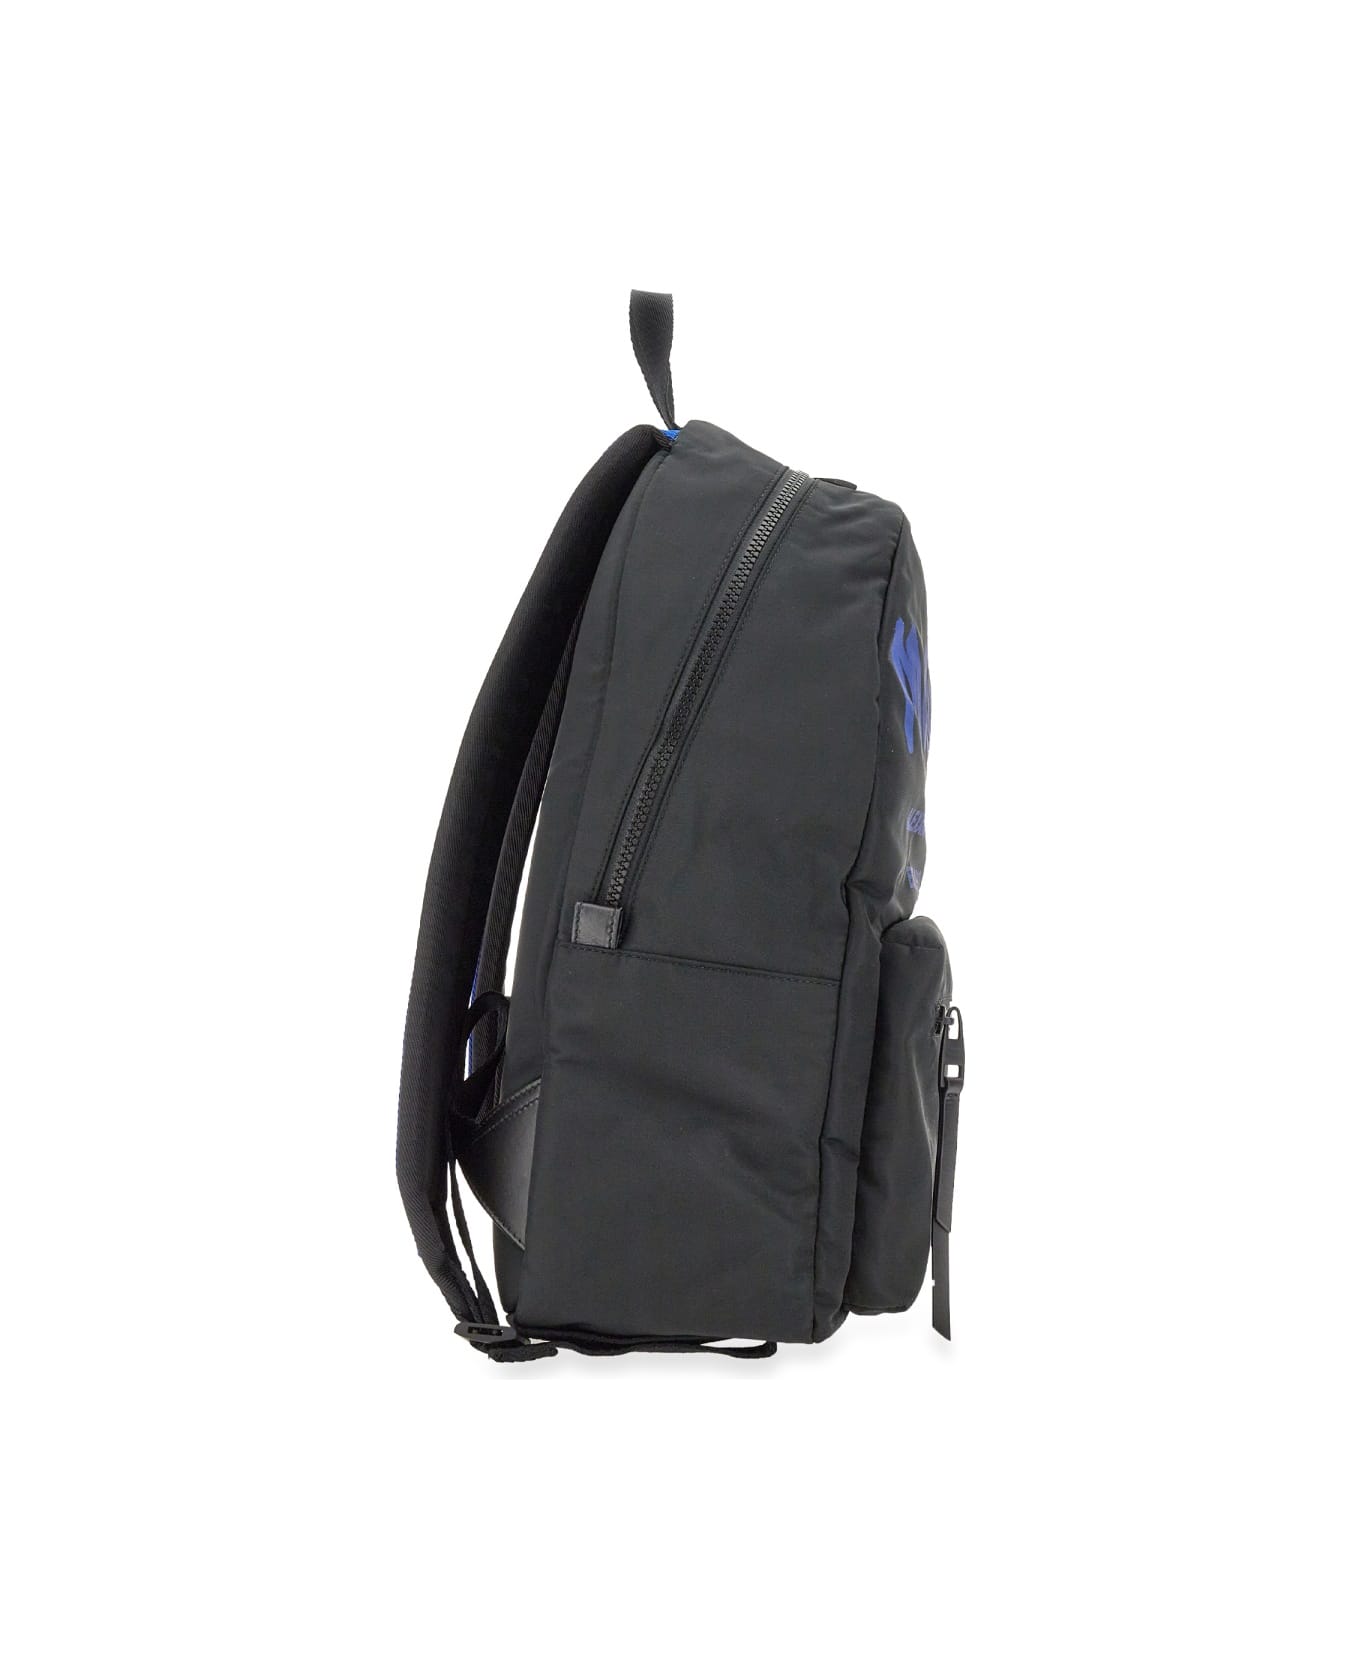 Alexander McQueen Metropolitan Backpack - BLACK バックパック